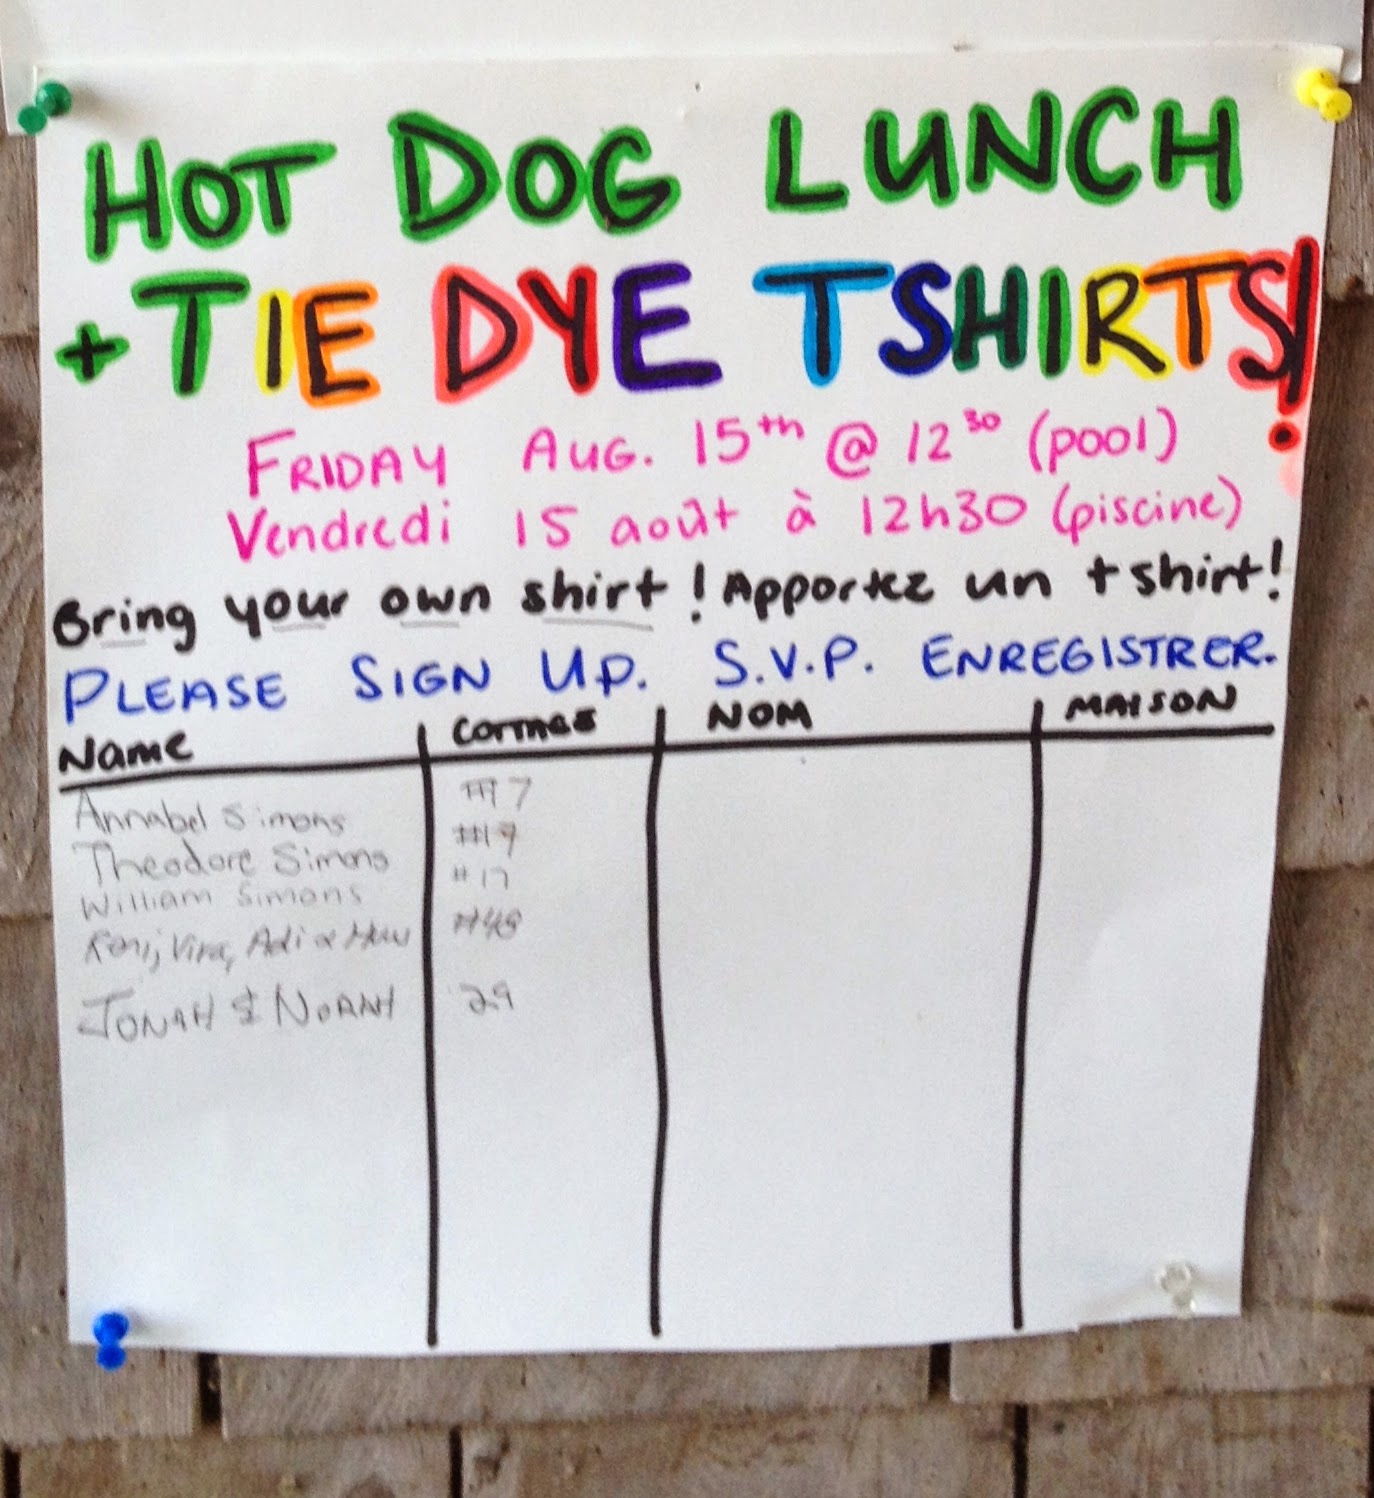 Hot Dog Lunch & Tie Dye T-Shirts – vendredi 15 août à 12:30 (piscine)